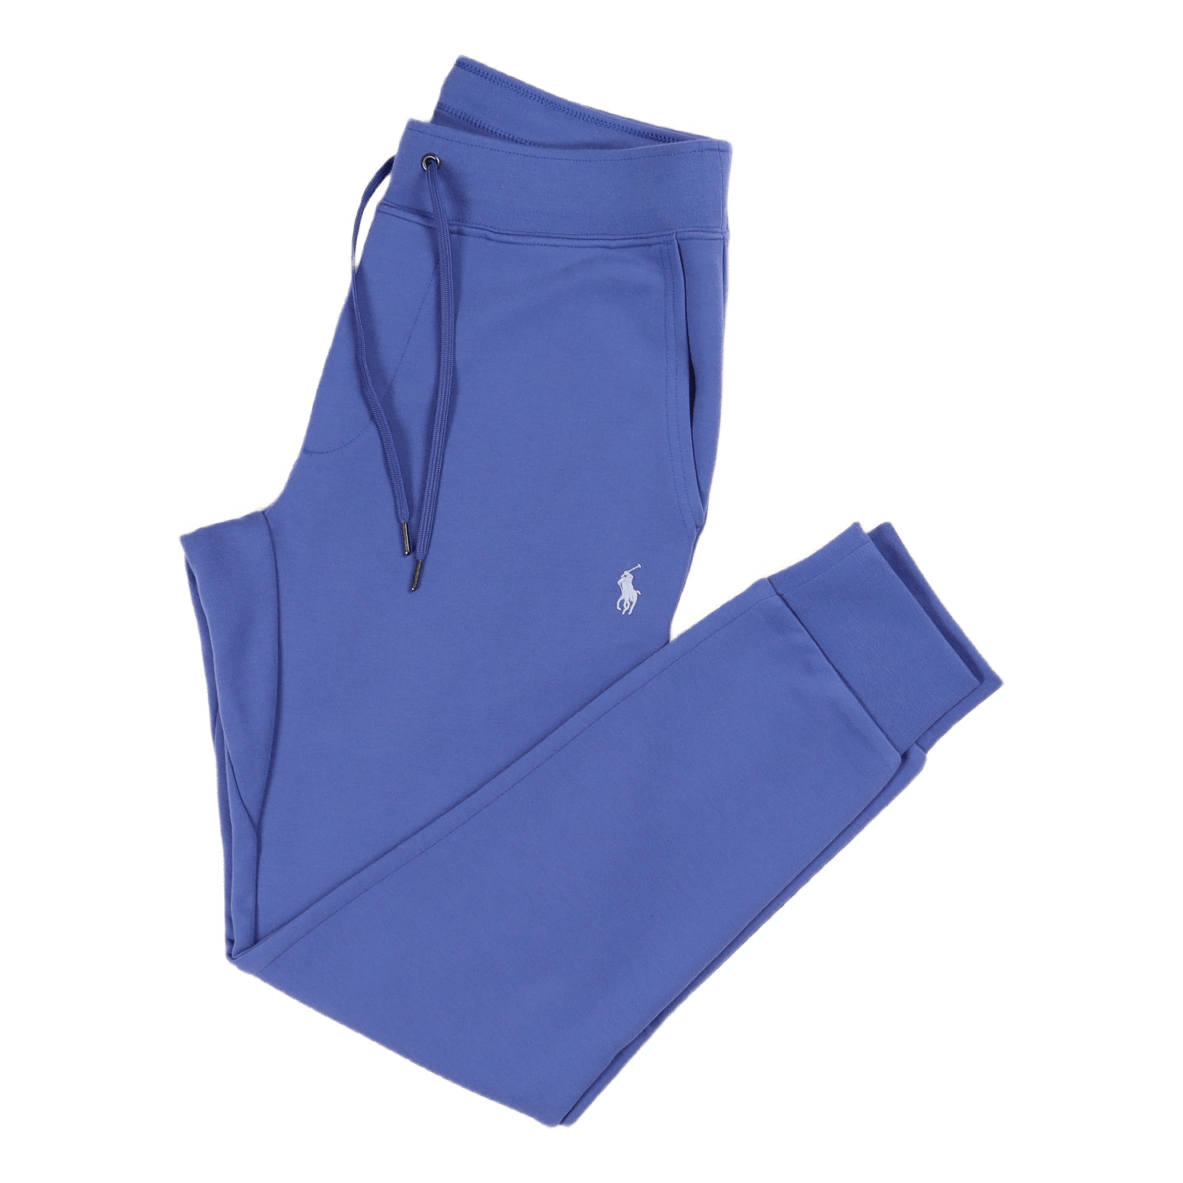 Double-Knit Jogger Pant Liberty Blue